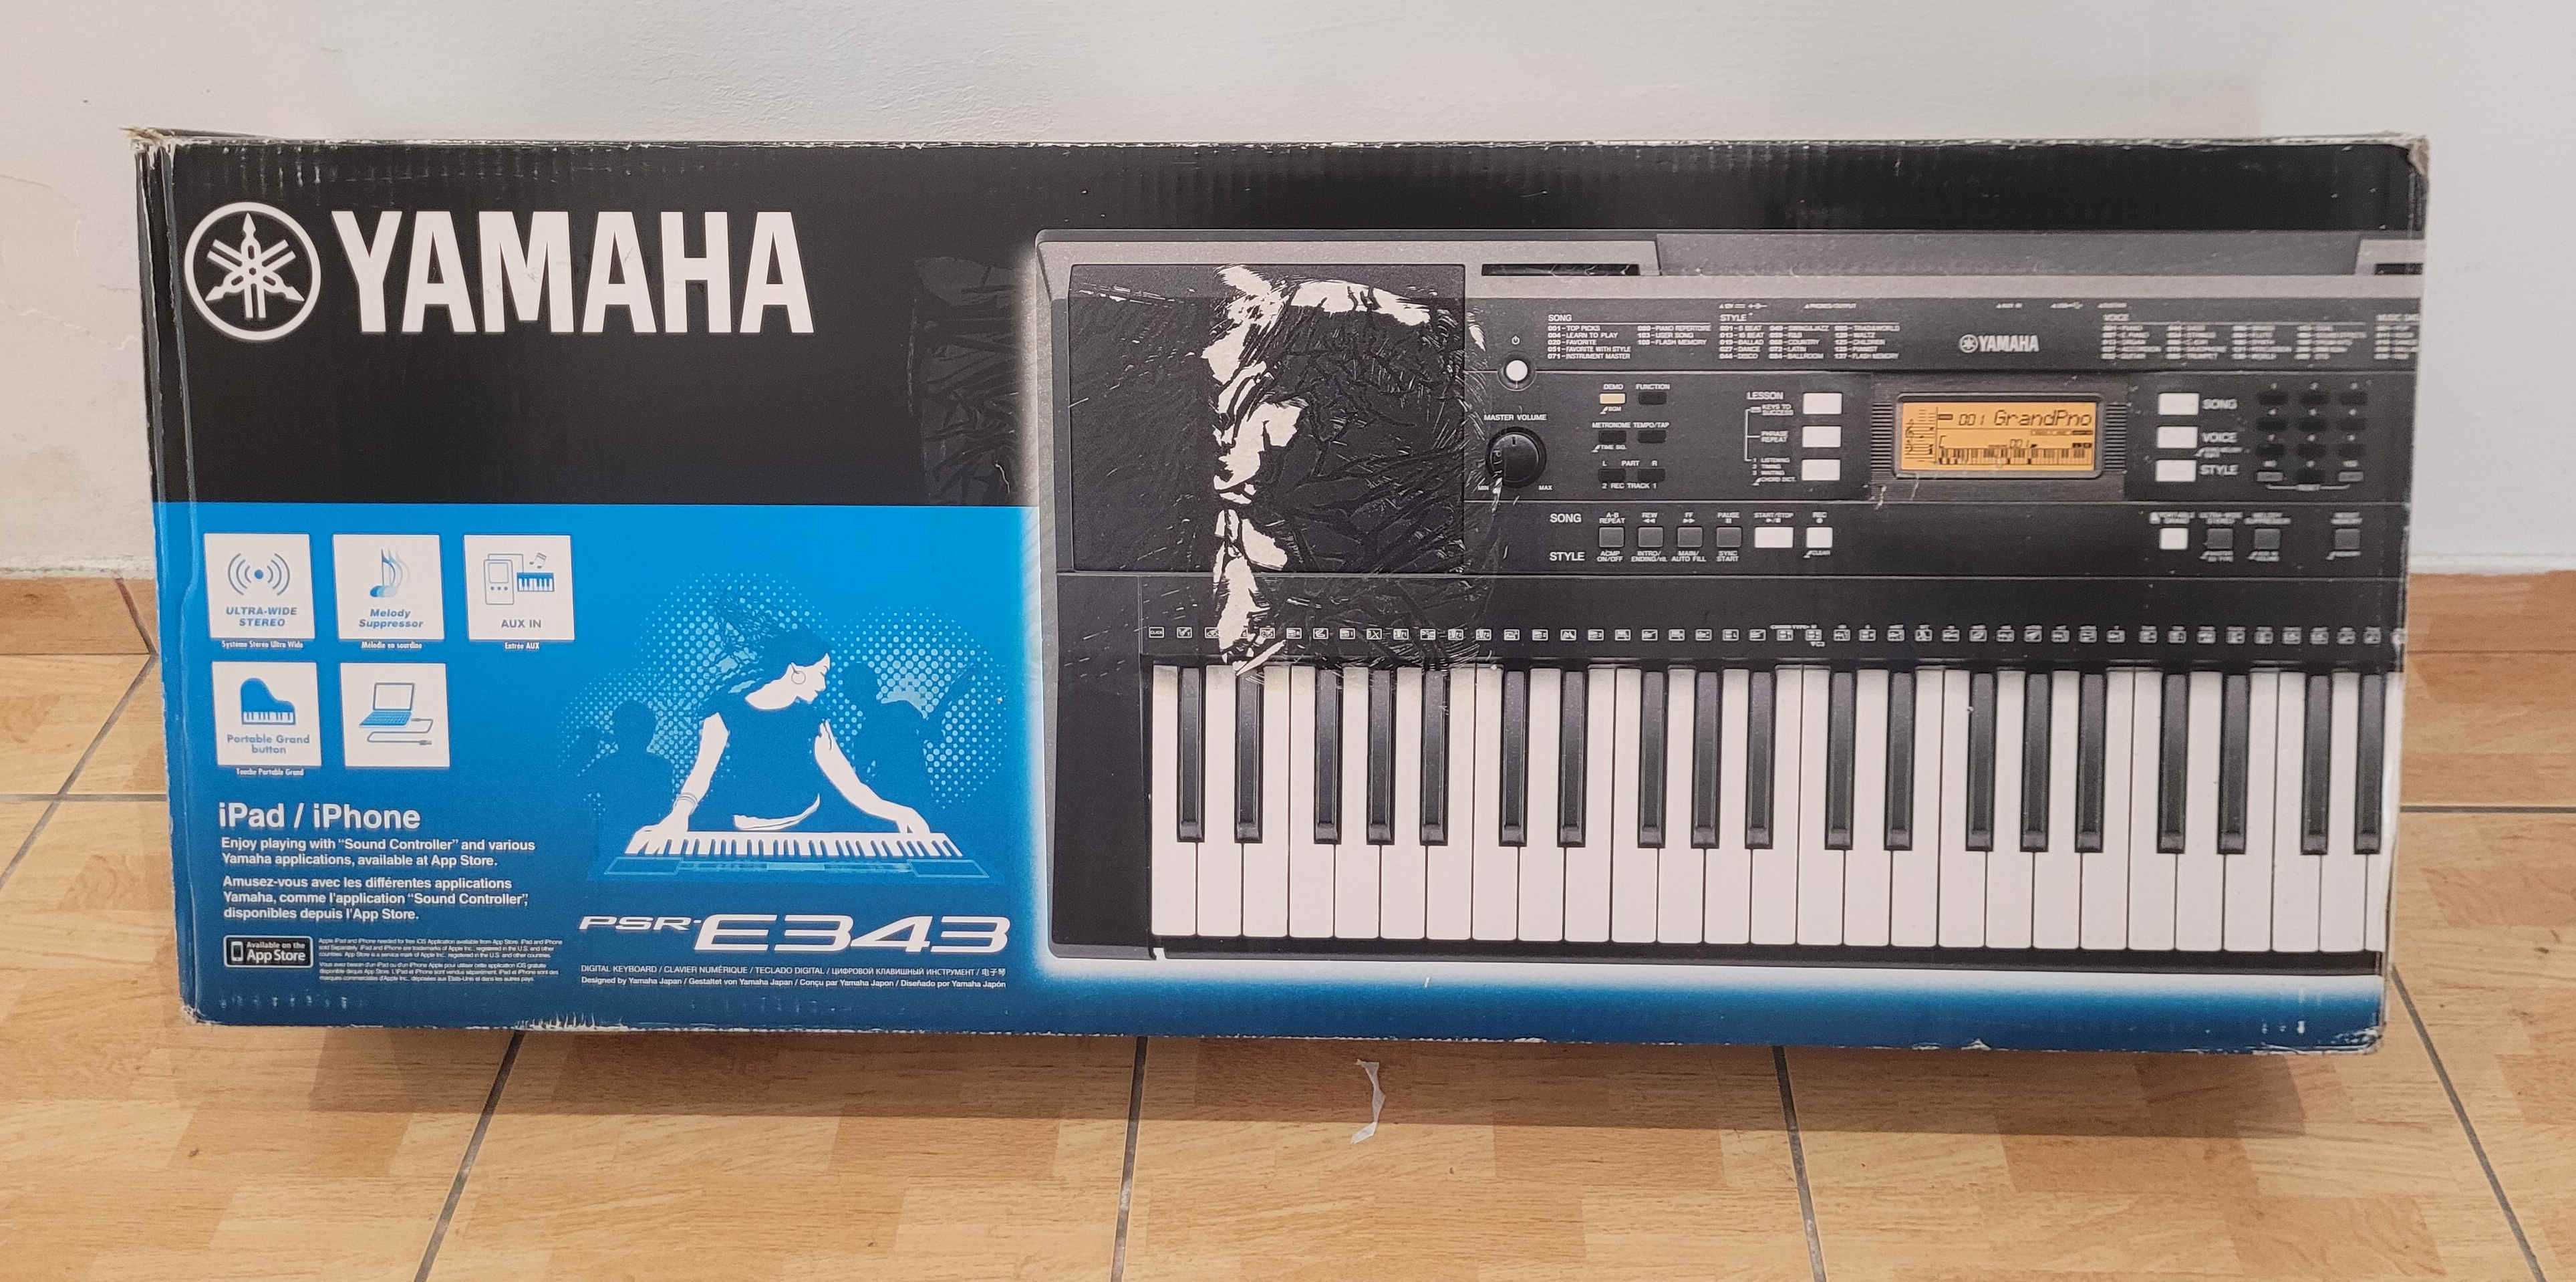 Klawisze Keyboard Organy Yamaha PSR E343 Pudełko